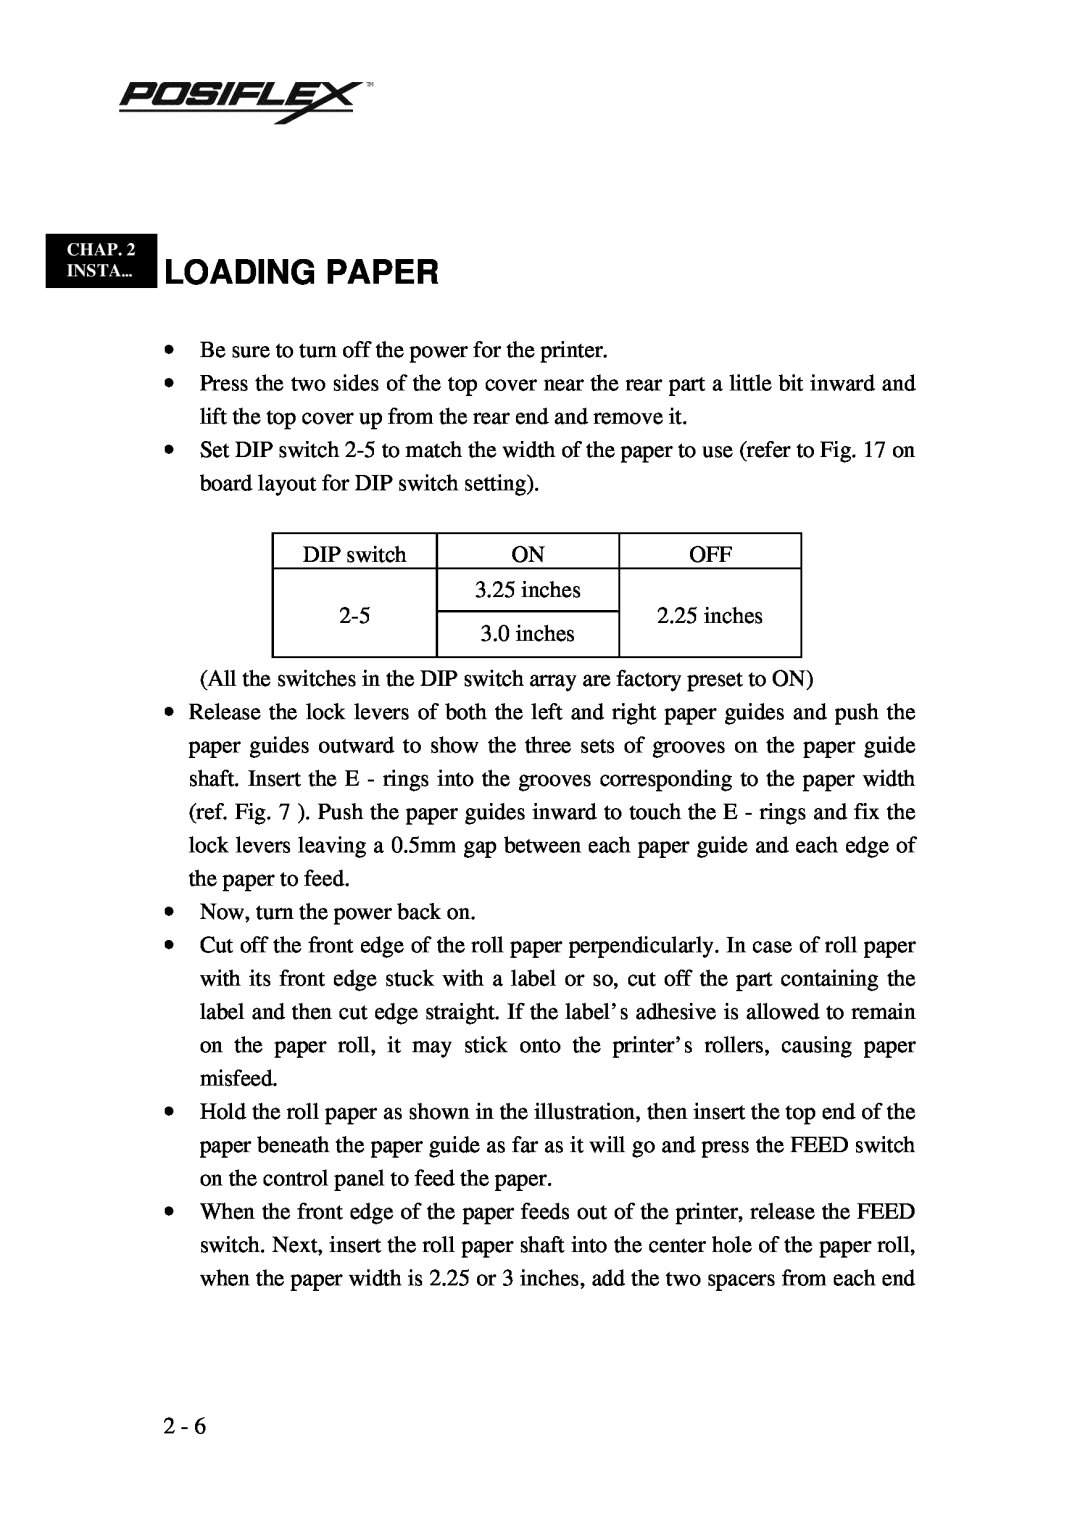 POSIFLEX Business Machines PP3000 manual Loading Paper 